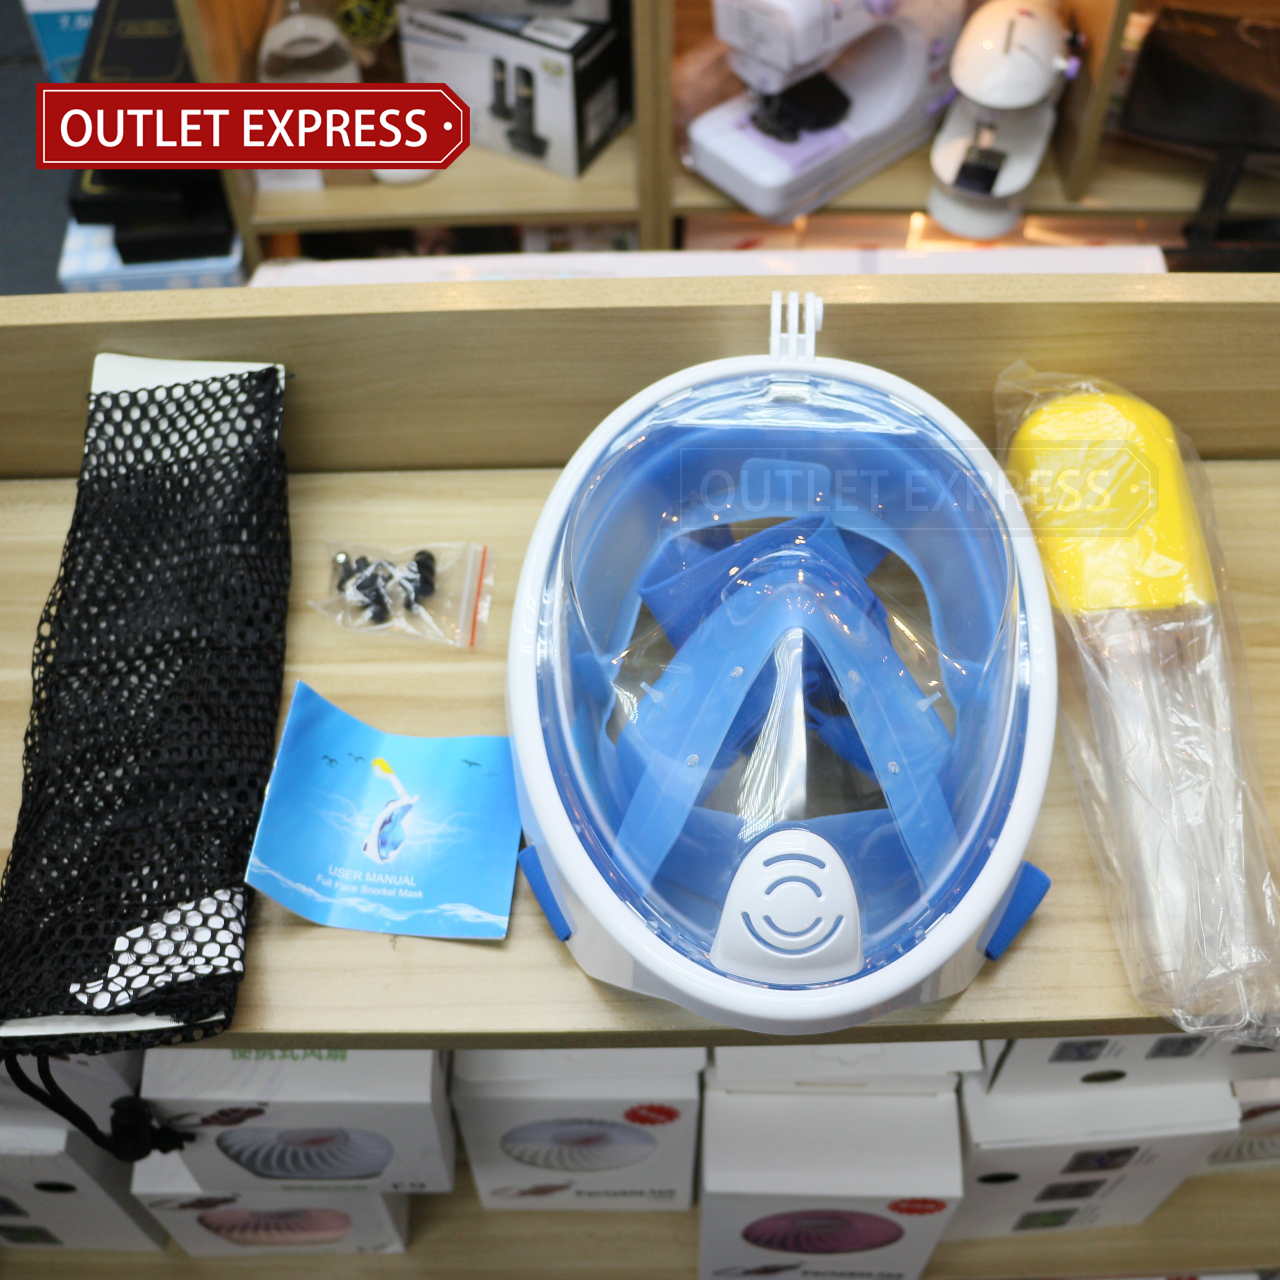 DRY DOP 全乾式浮潛潛水面罩 連配件- Outlet Express HK生活百貨城實拍相片